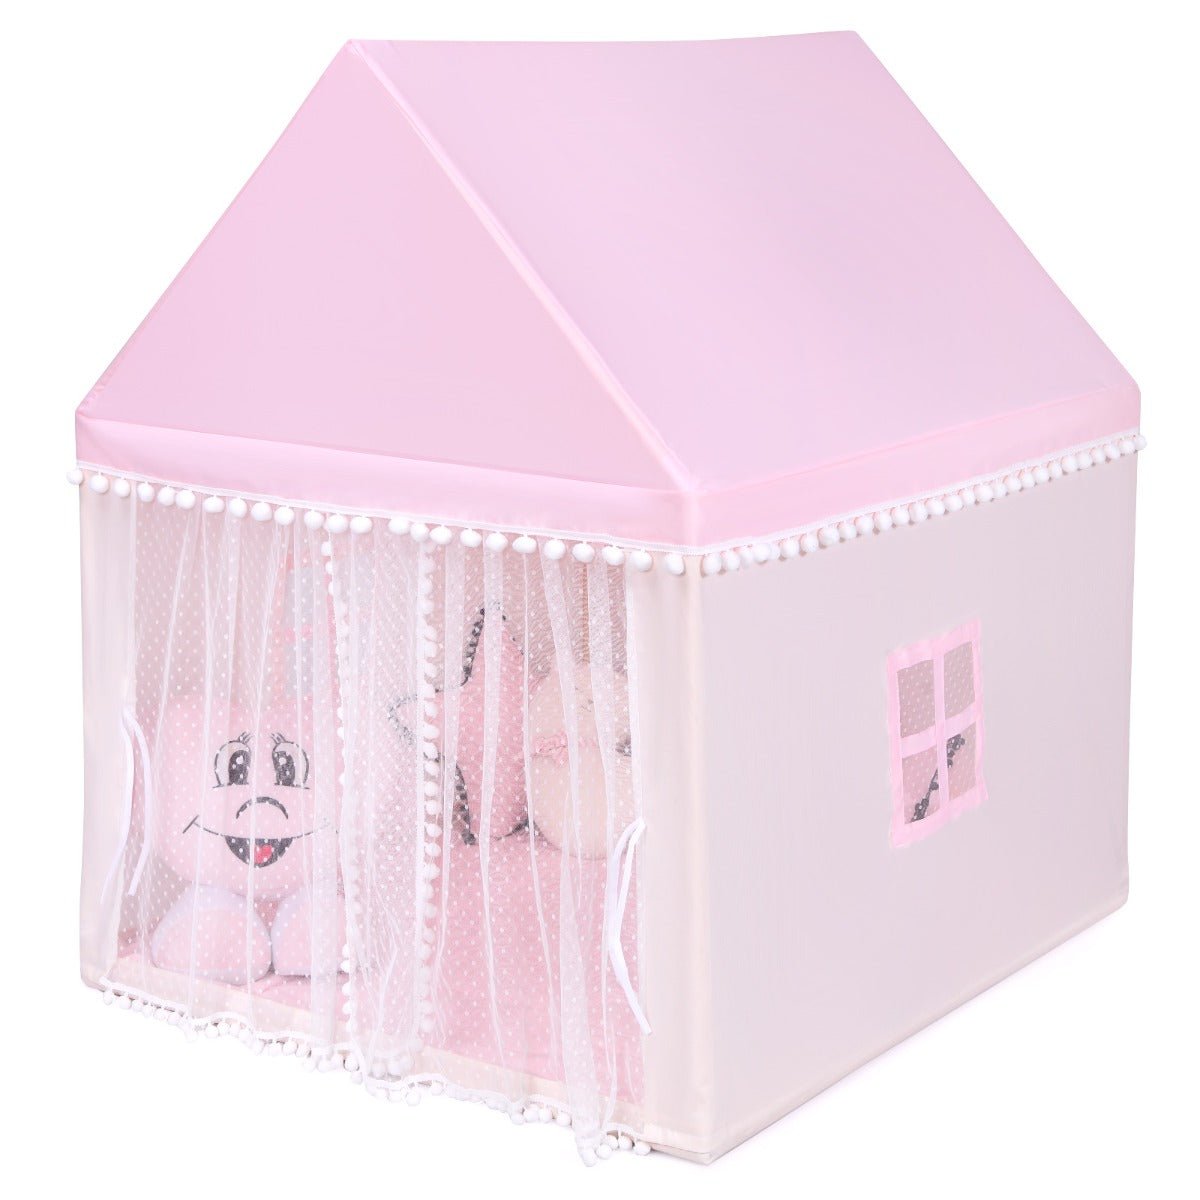 Pink Fantasy Castle Playhouse for Kids: Wood Frame & Cotton Mat